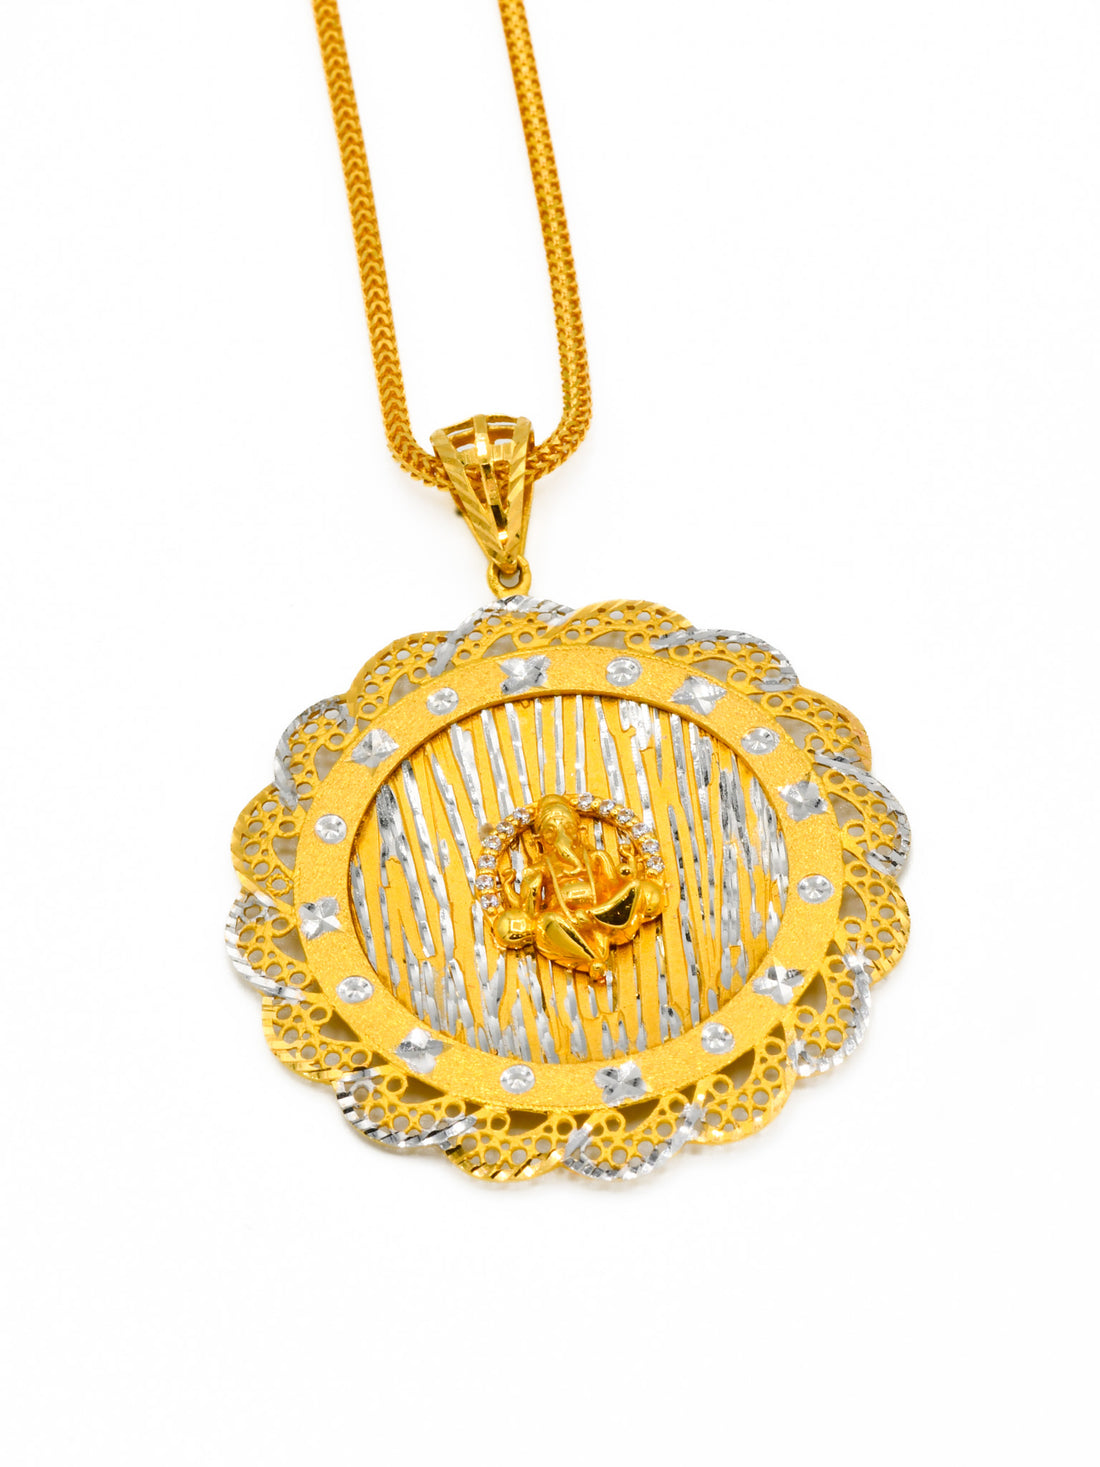 22ct Gold Two Tone Fancy Ganesh Pendant - Roop Darshan